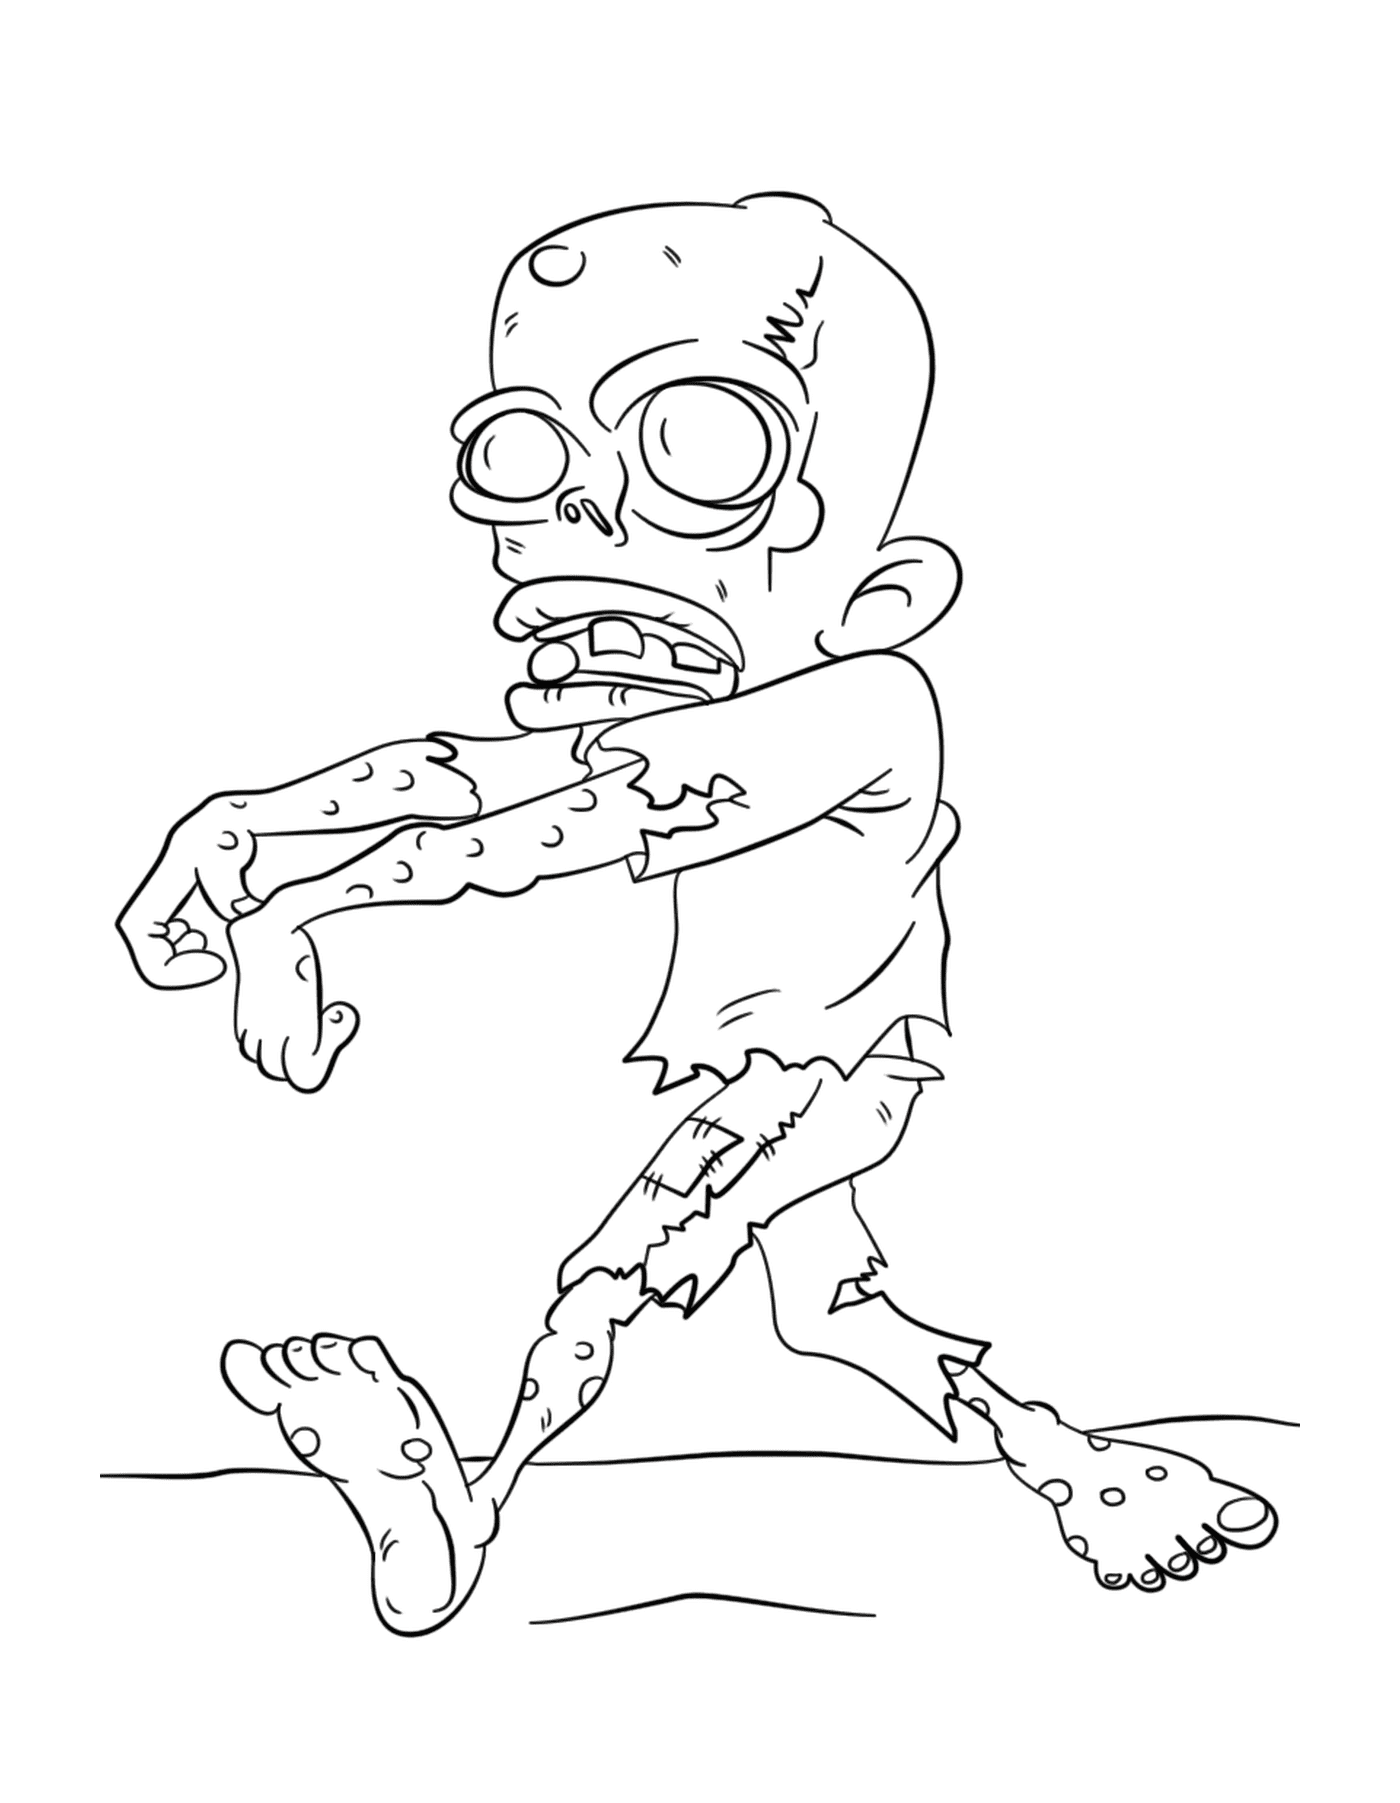  Un zombi andante 